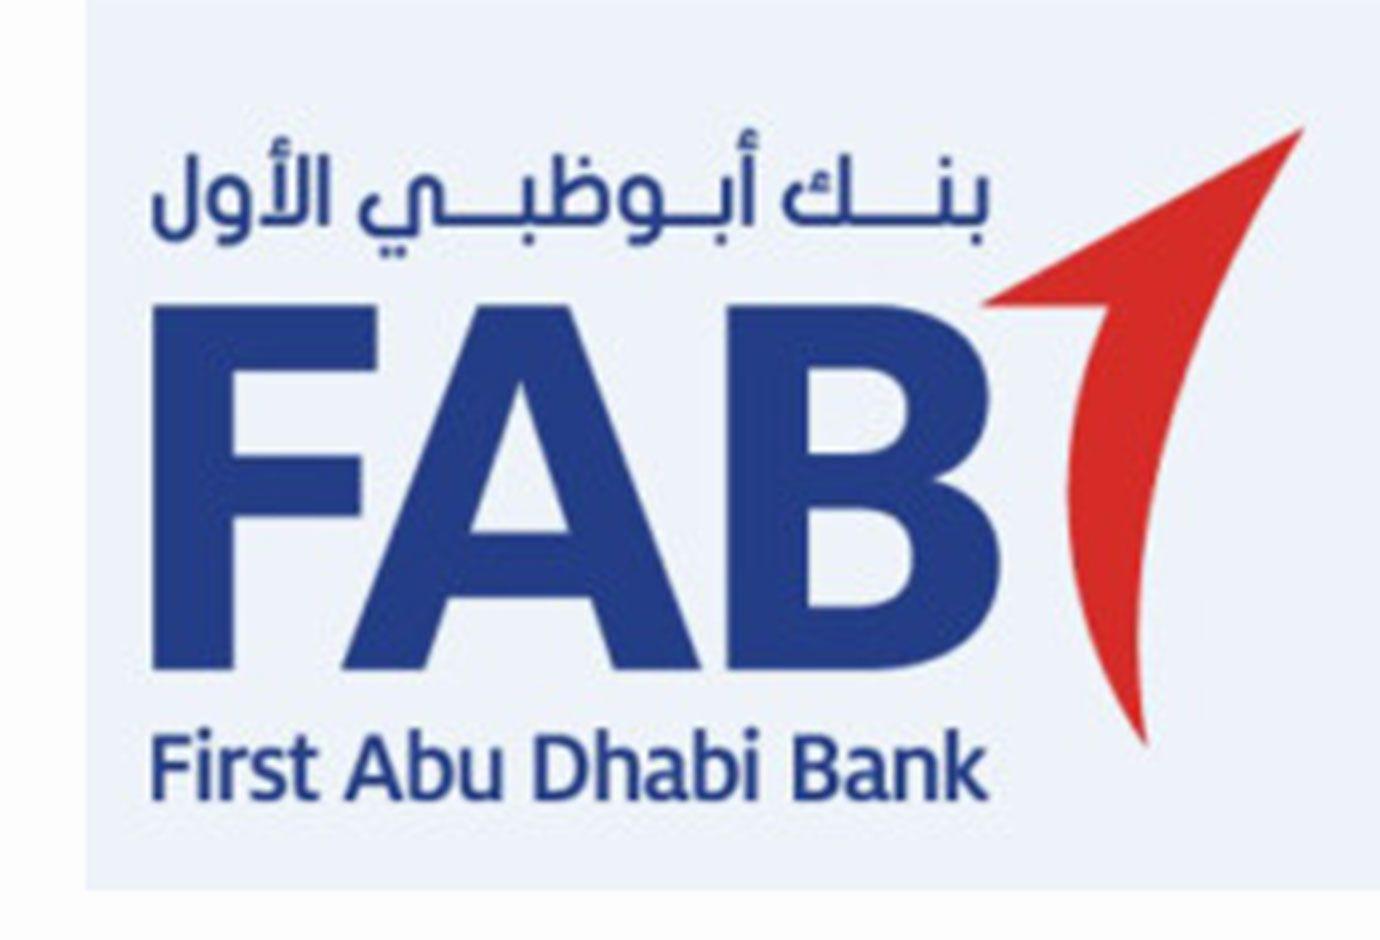 Bank Brand Logo - First Abu Dhabi Bank launches brand identity